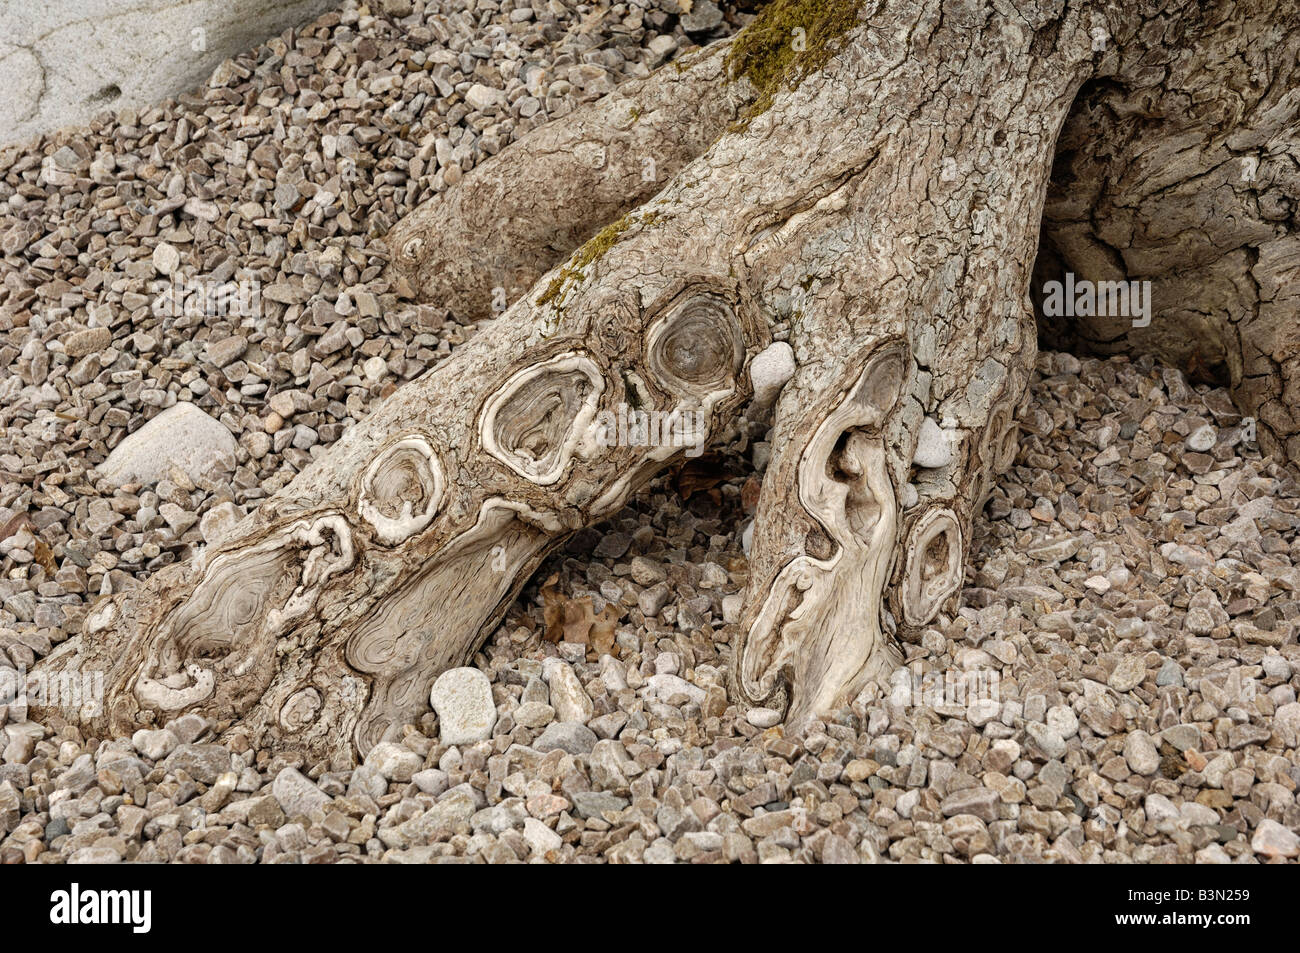 Knarled tree roots and pebbles Stock Photo